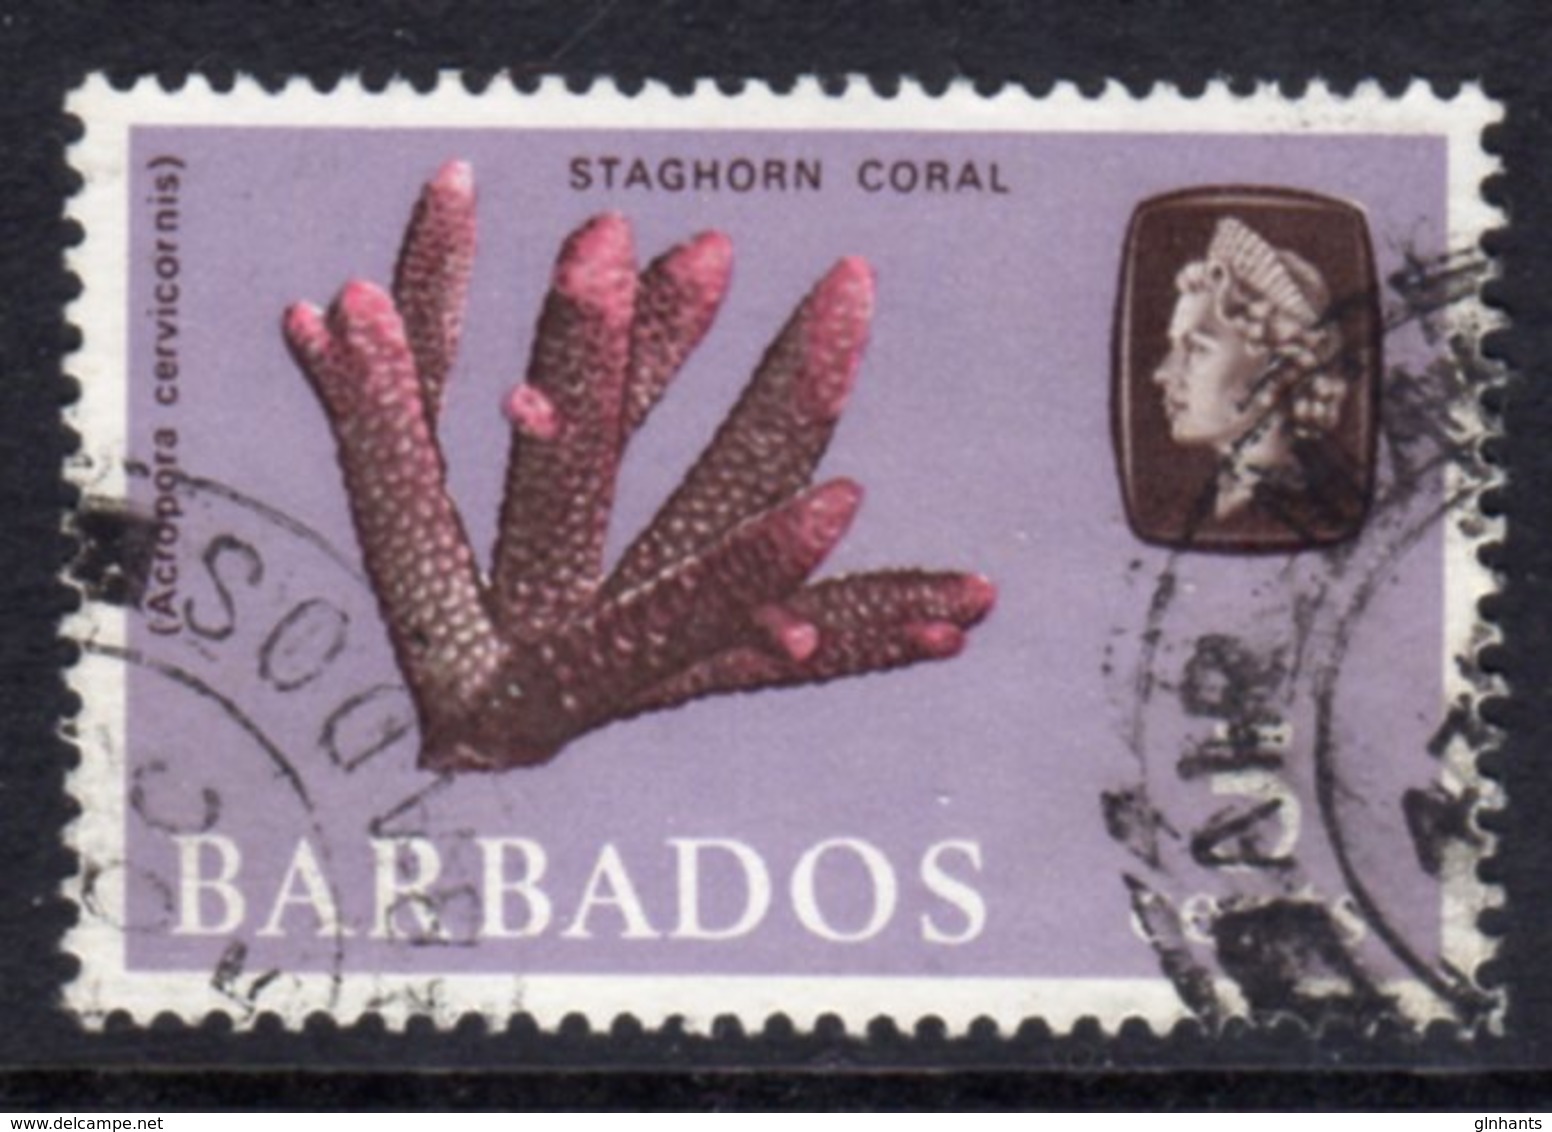 BARBADOS - 1965 5c DEFINITIVE STAMP WMK W12 UPRIGHT REF C USED SG 326 - Barbados (...-1966)